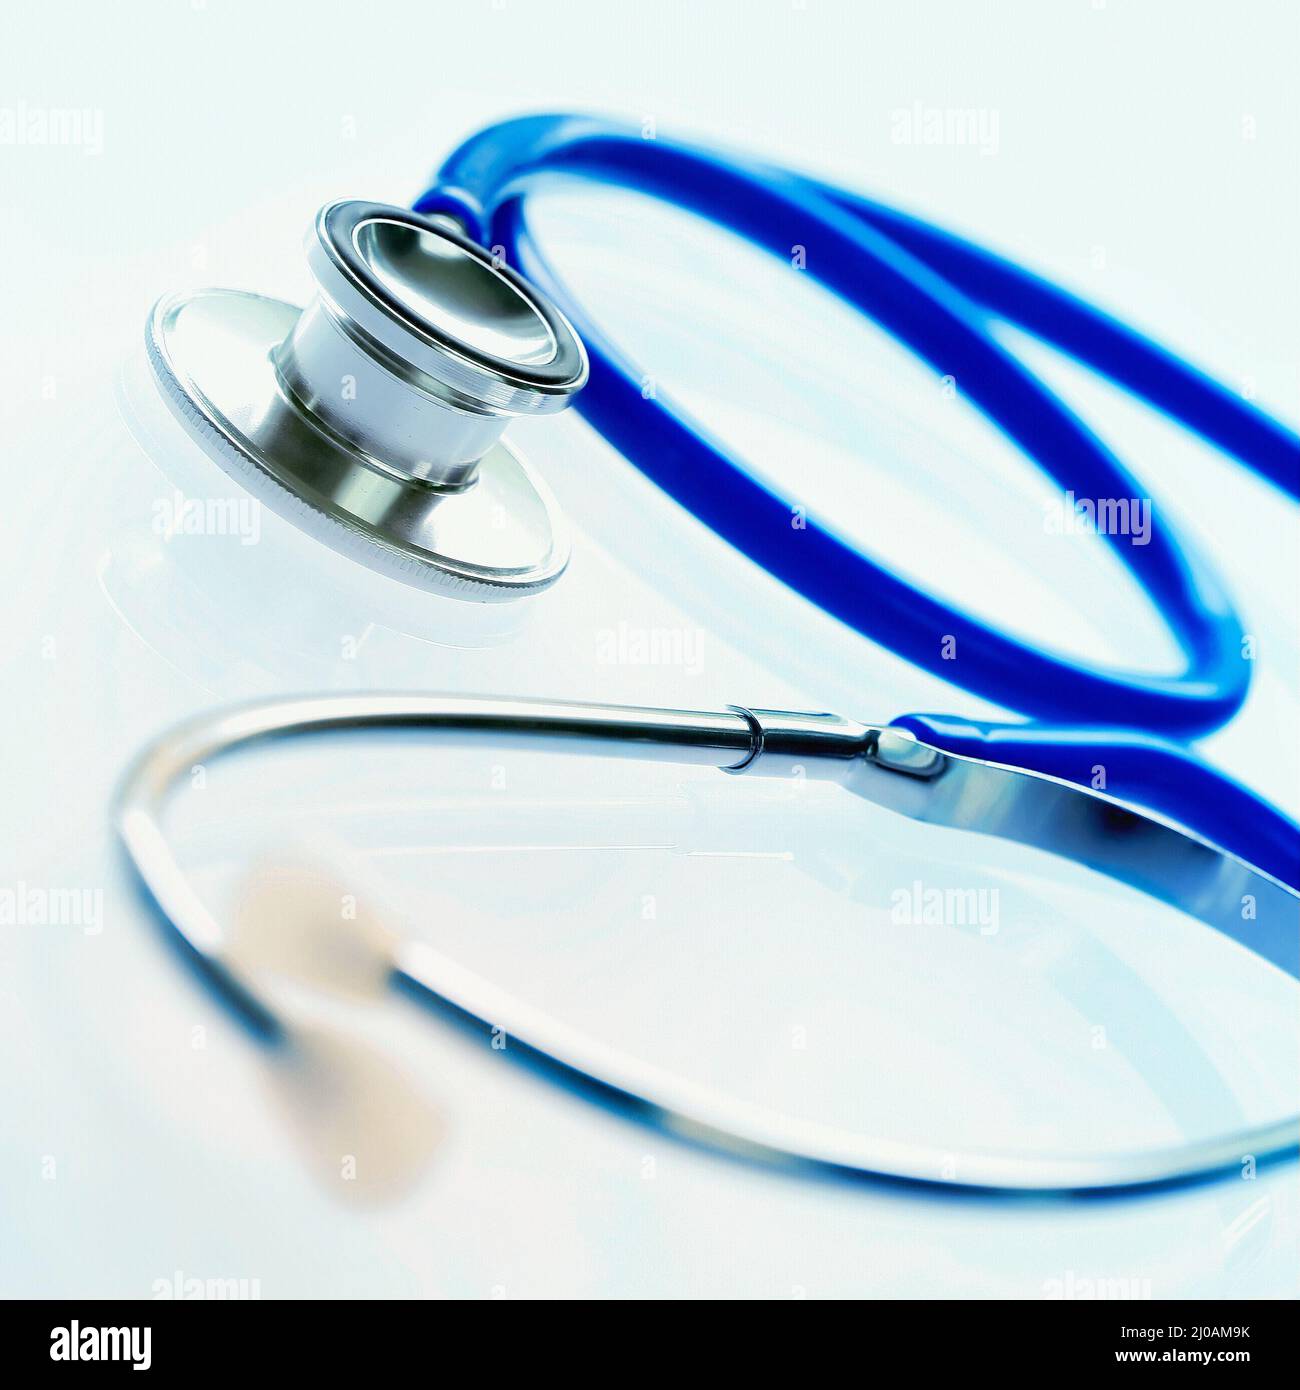 Image of a stethoscope on white background. Stock Photo